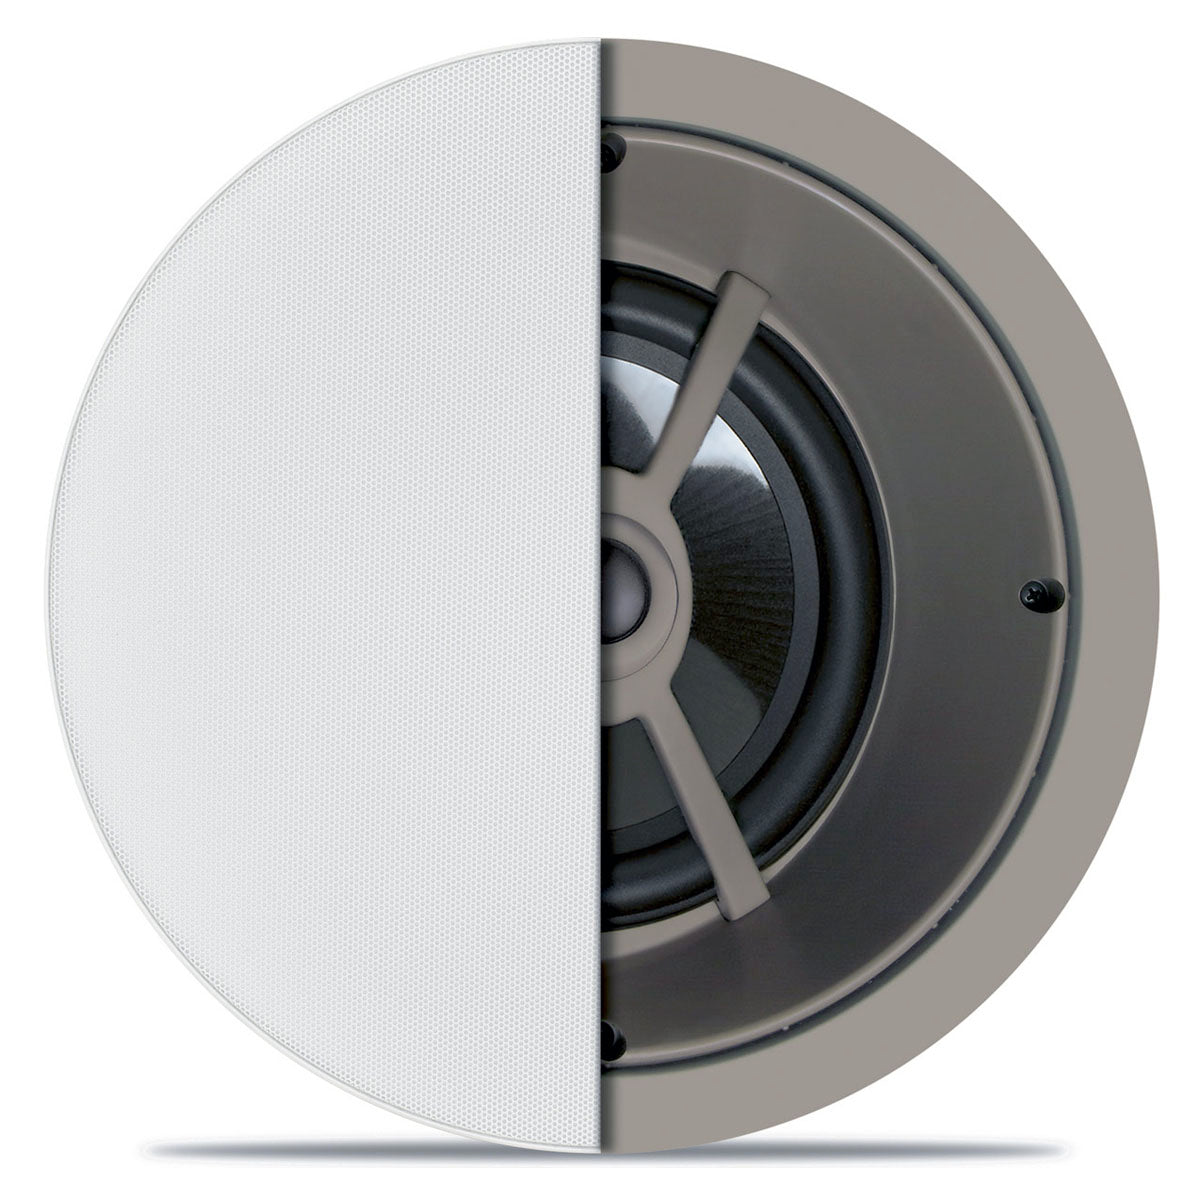 Proficient Audio Protege Series C841 8" LCR Inceiling Speaker - piece